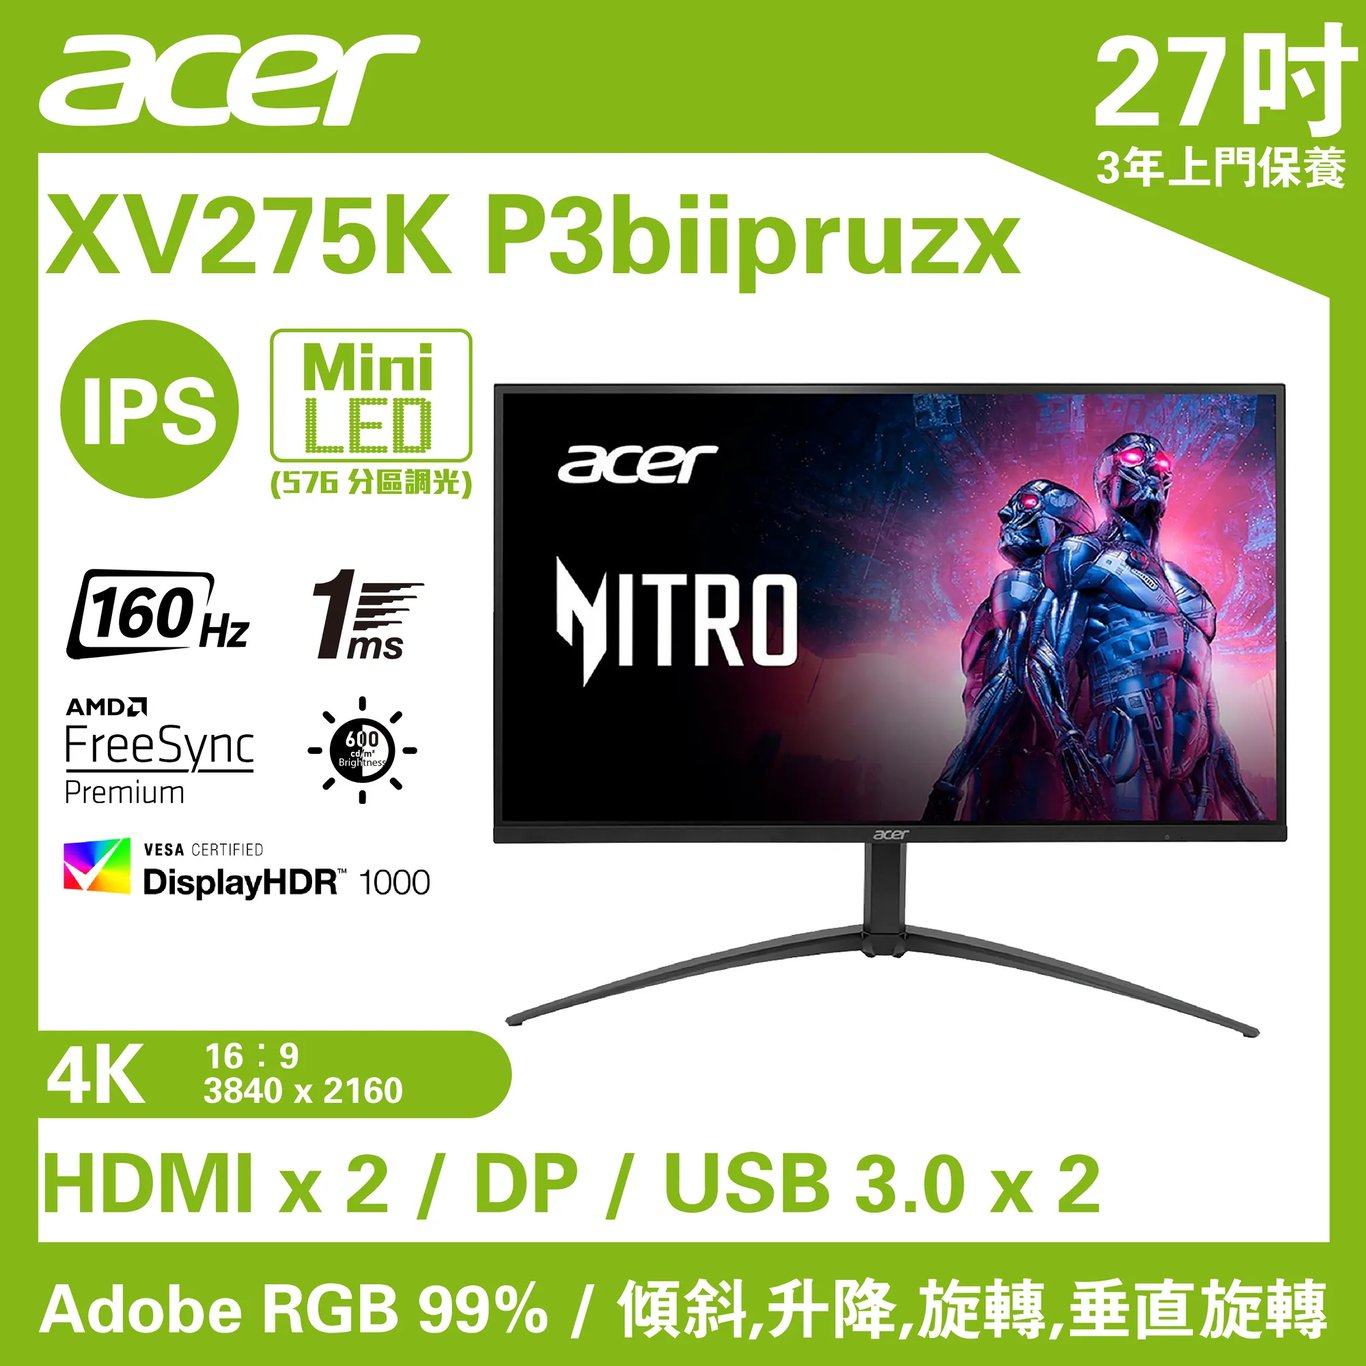 Acer NITRO XV275K P3biipruzx 電競顯示器 (27吋 / 4K UHD / 160Hz / IPS / MiniLED / Type-C 90W / DisplayHDR 1000 / FreeSync Premium / 內置喇叭) - 3840 x 2160